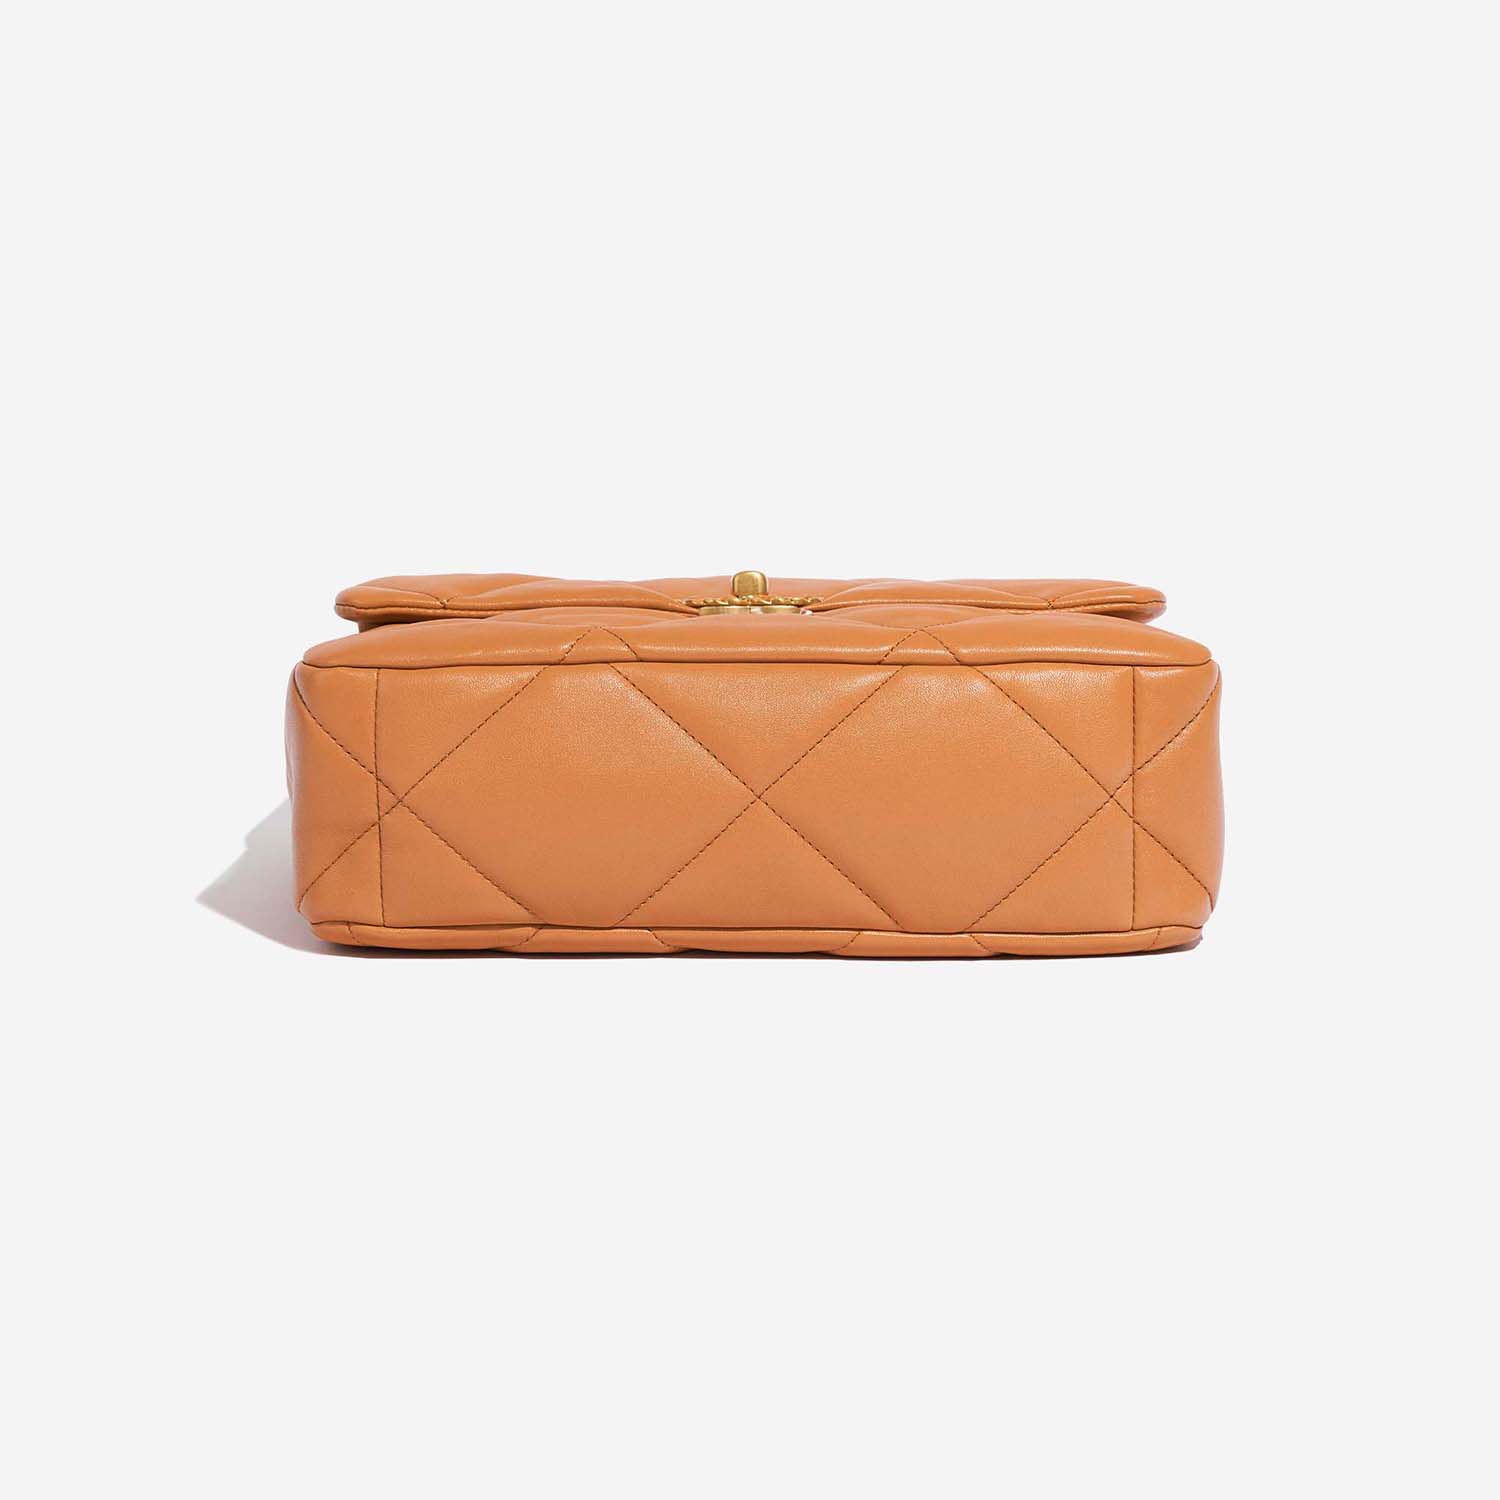 Chanel 19 Large Flap Bag Cognac Bottom  | Sell your designer bag on Saclab.com